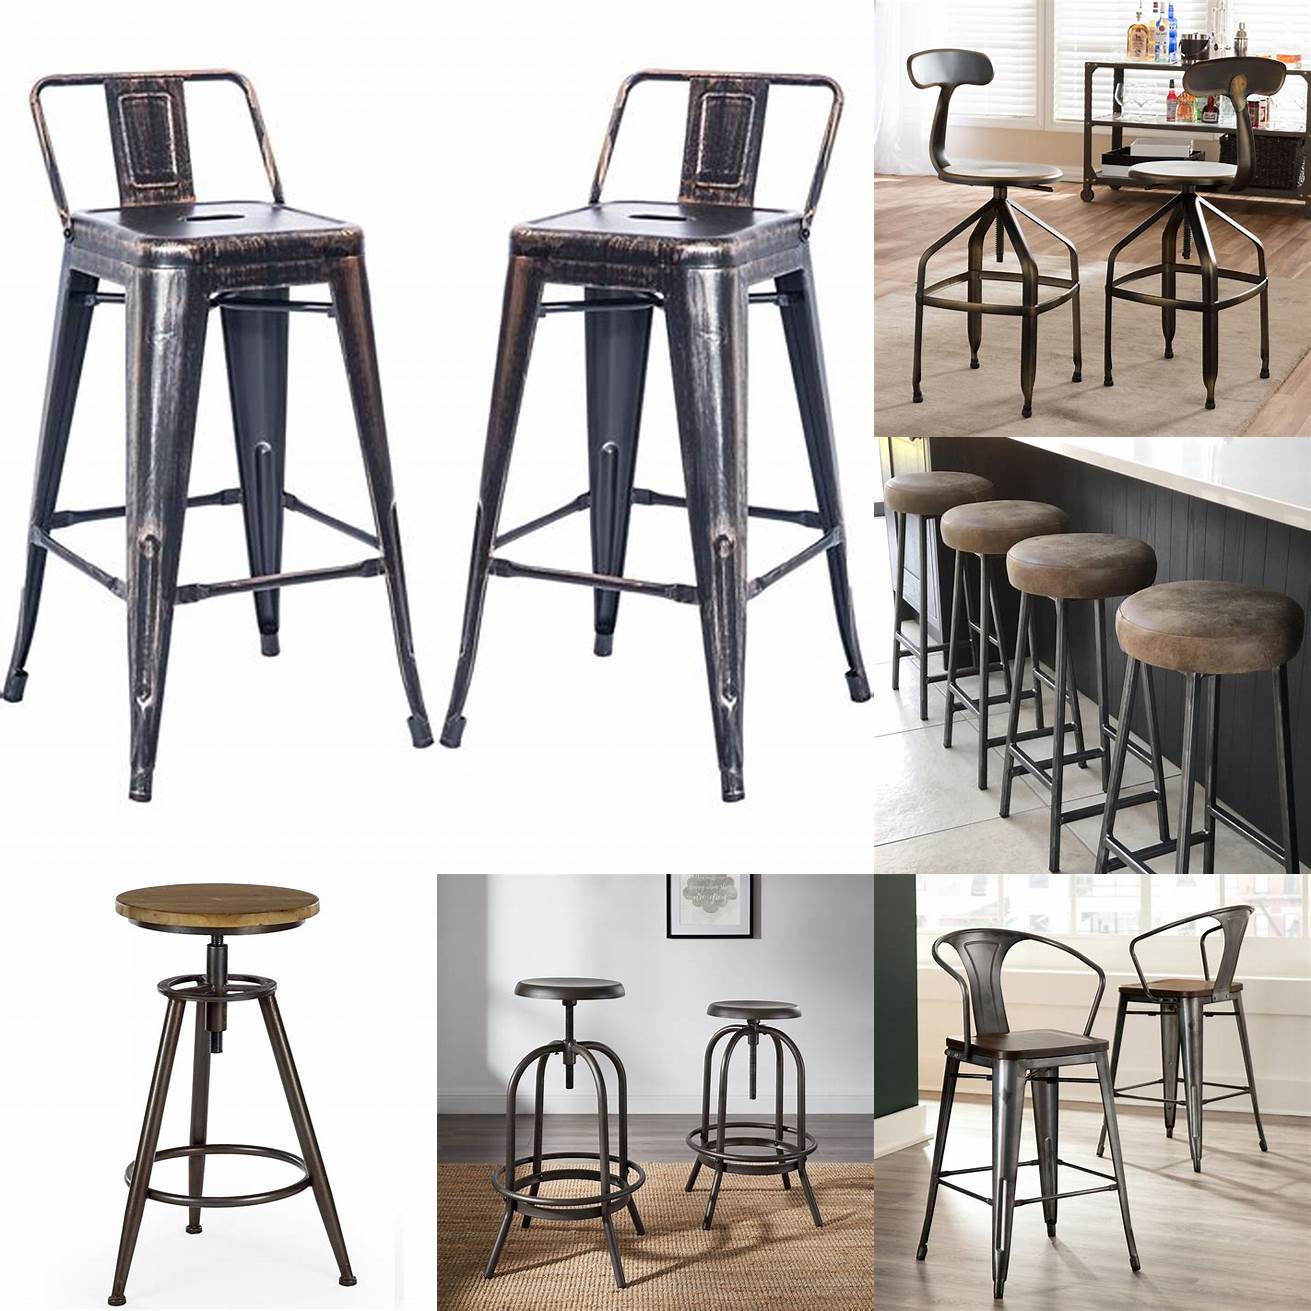 Industrial metal bar stools